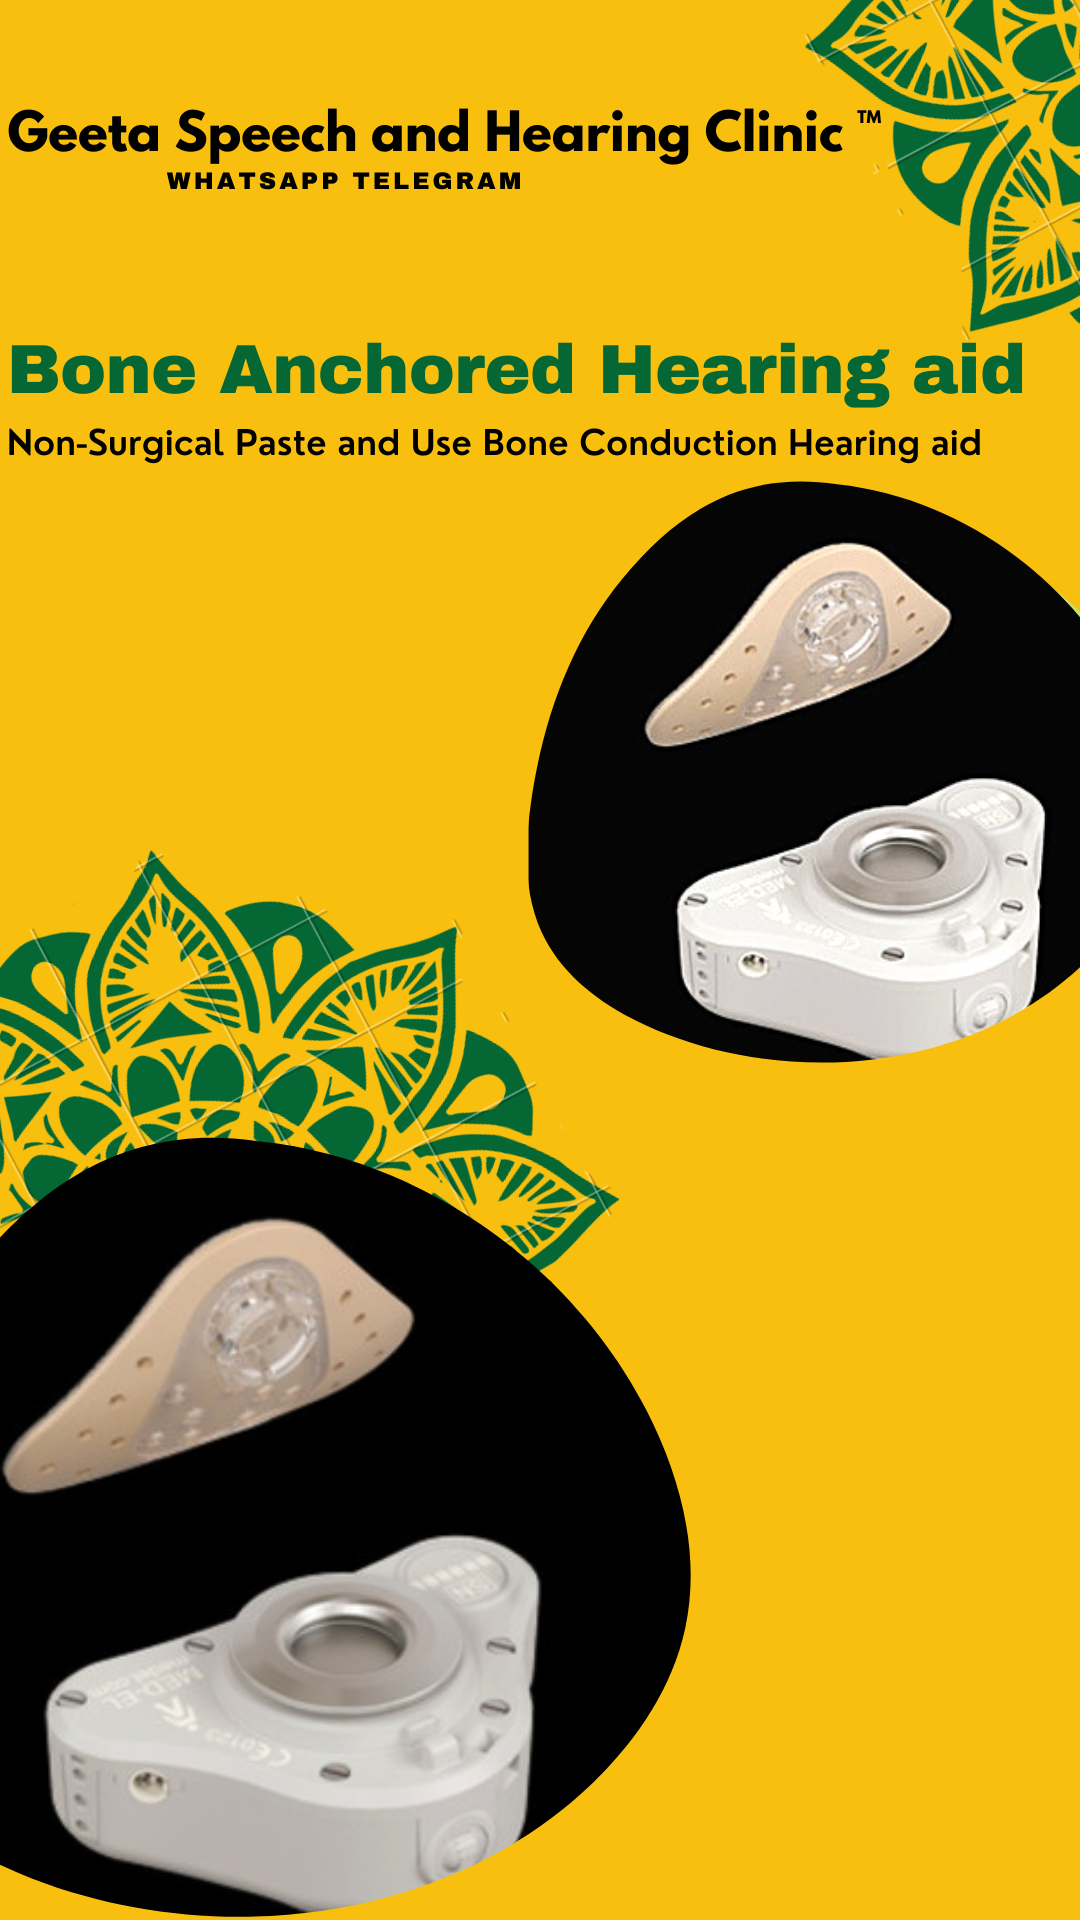 Bone anchored Hearing aid from GEETA SPEECH AND HEARING CLINIC